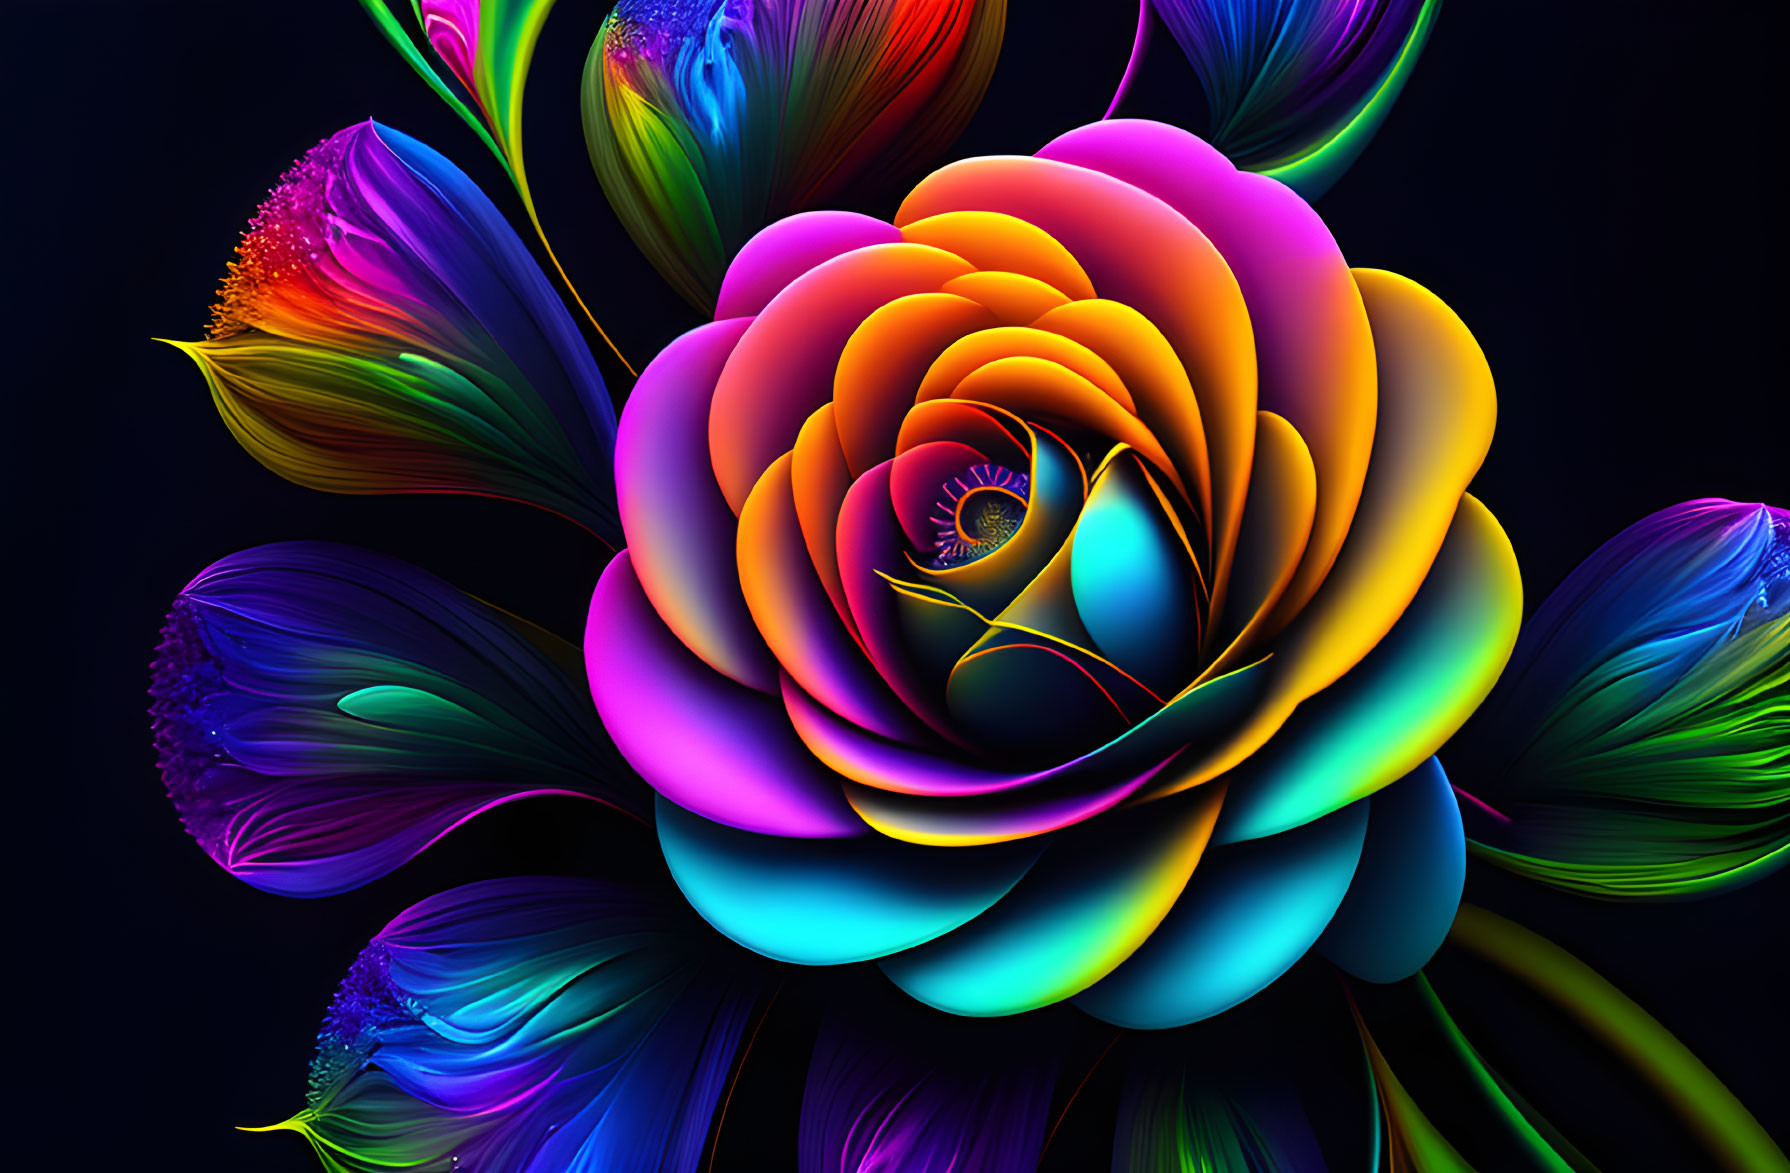 Colorful Stylized Rose Artwork on Dark Background